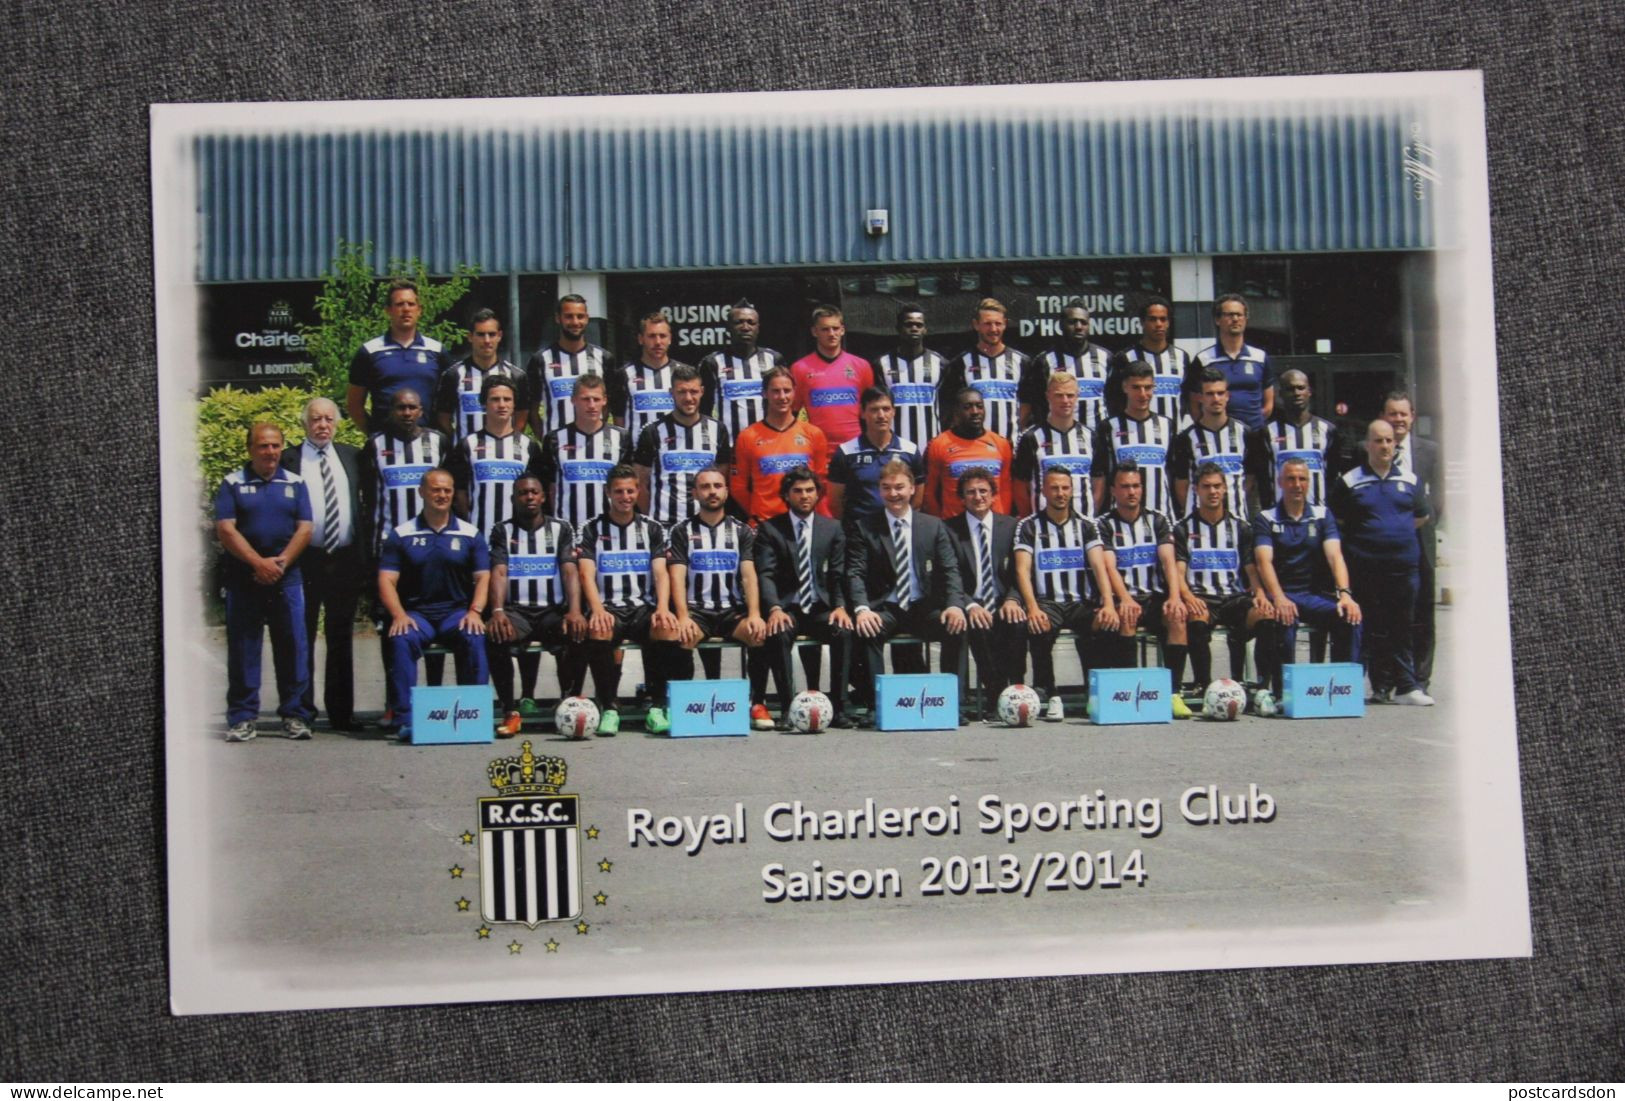 FUSSBALL-FOOTBALL-SOCCER- CALCIO, -Royal Charleroi Sporting Club -  OLD Photo Postcard Size - Soccer